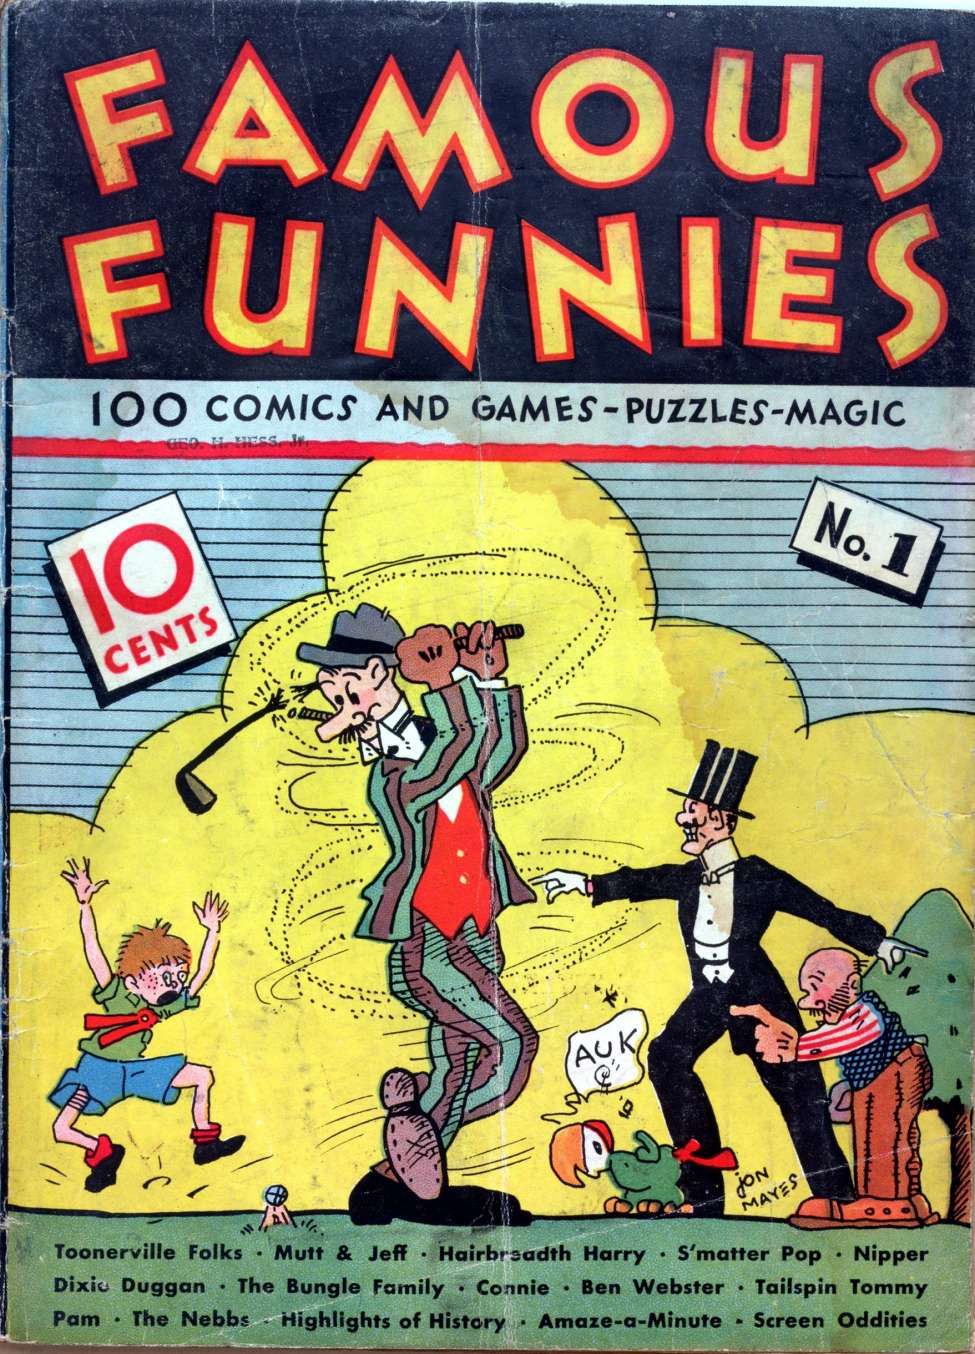 The original comic book series, Famous Funnies